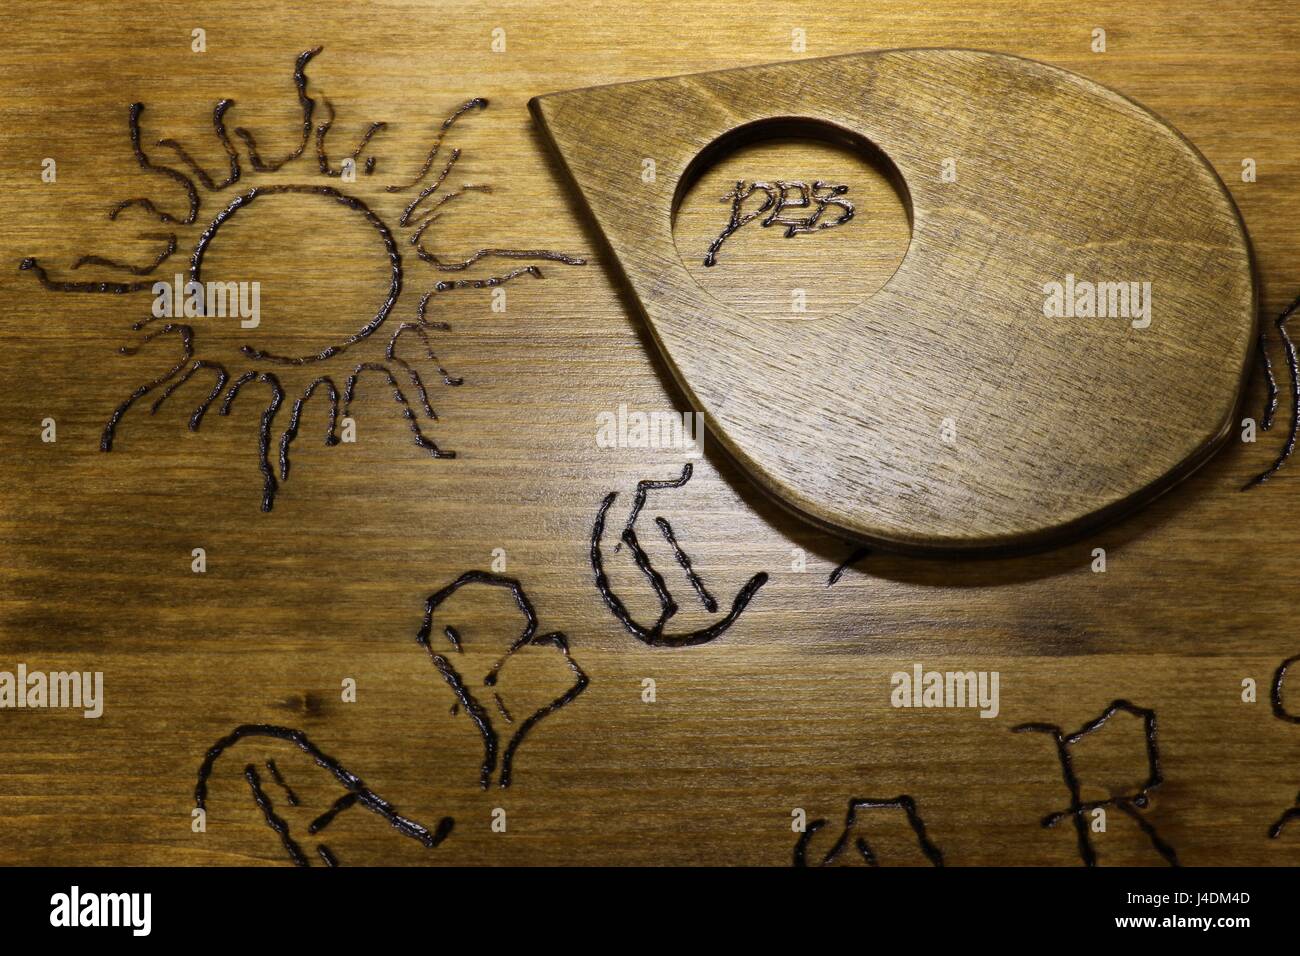 planchette on wooden talking board Stock Photo